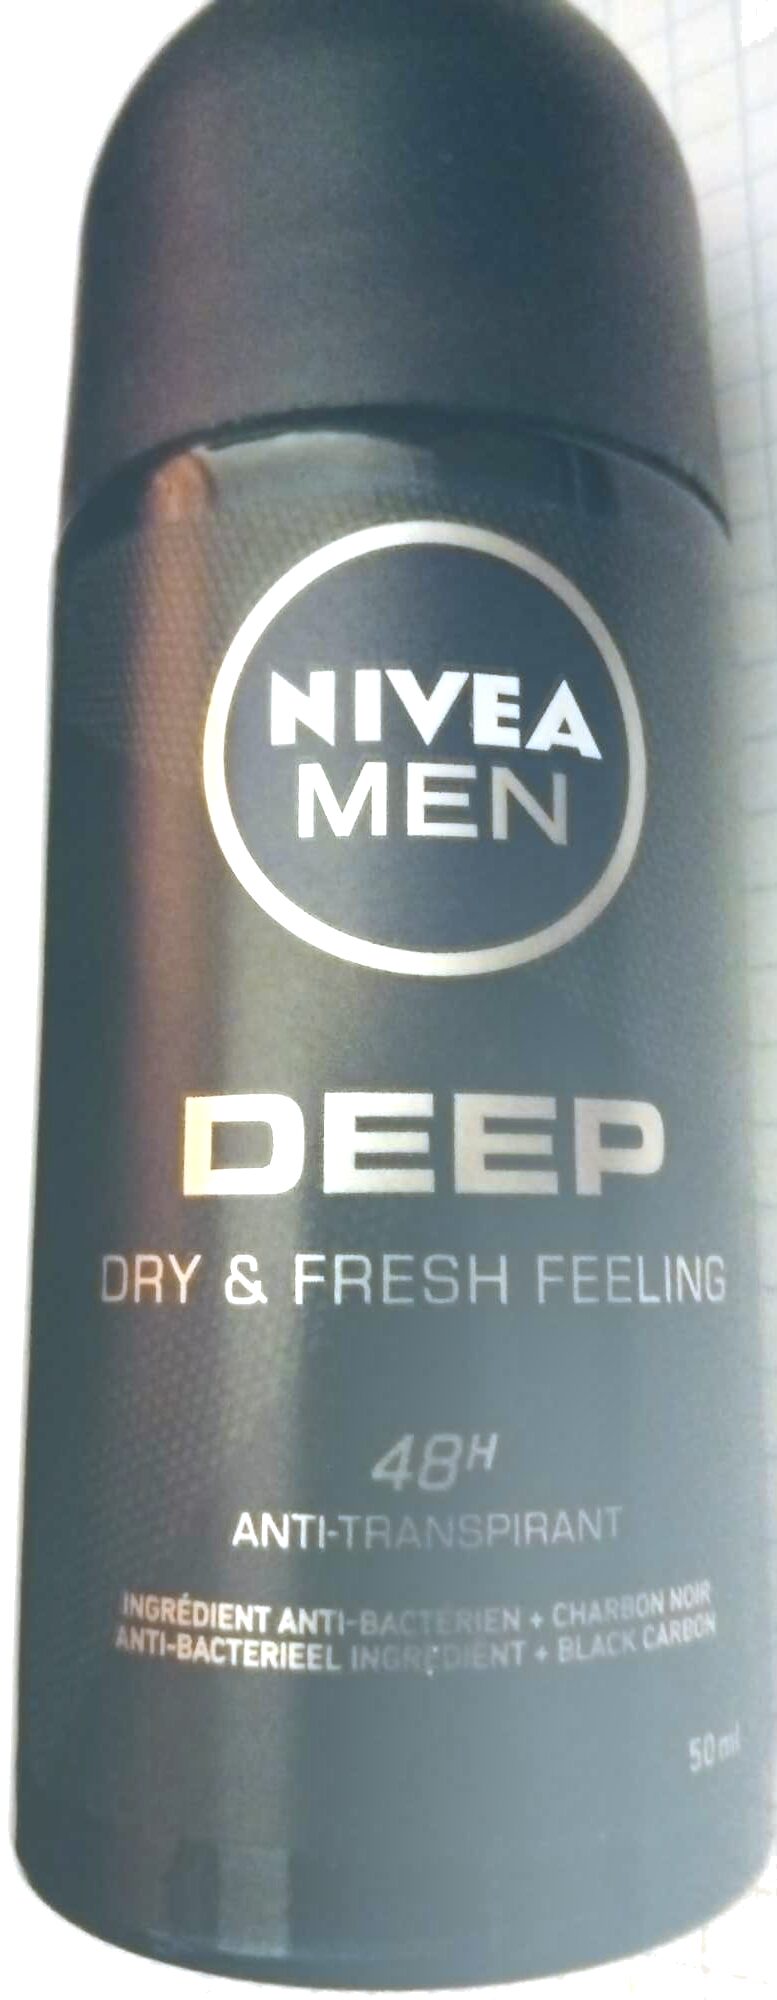 Deep Dry & Fresh Feeling 48h - Produto - en